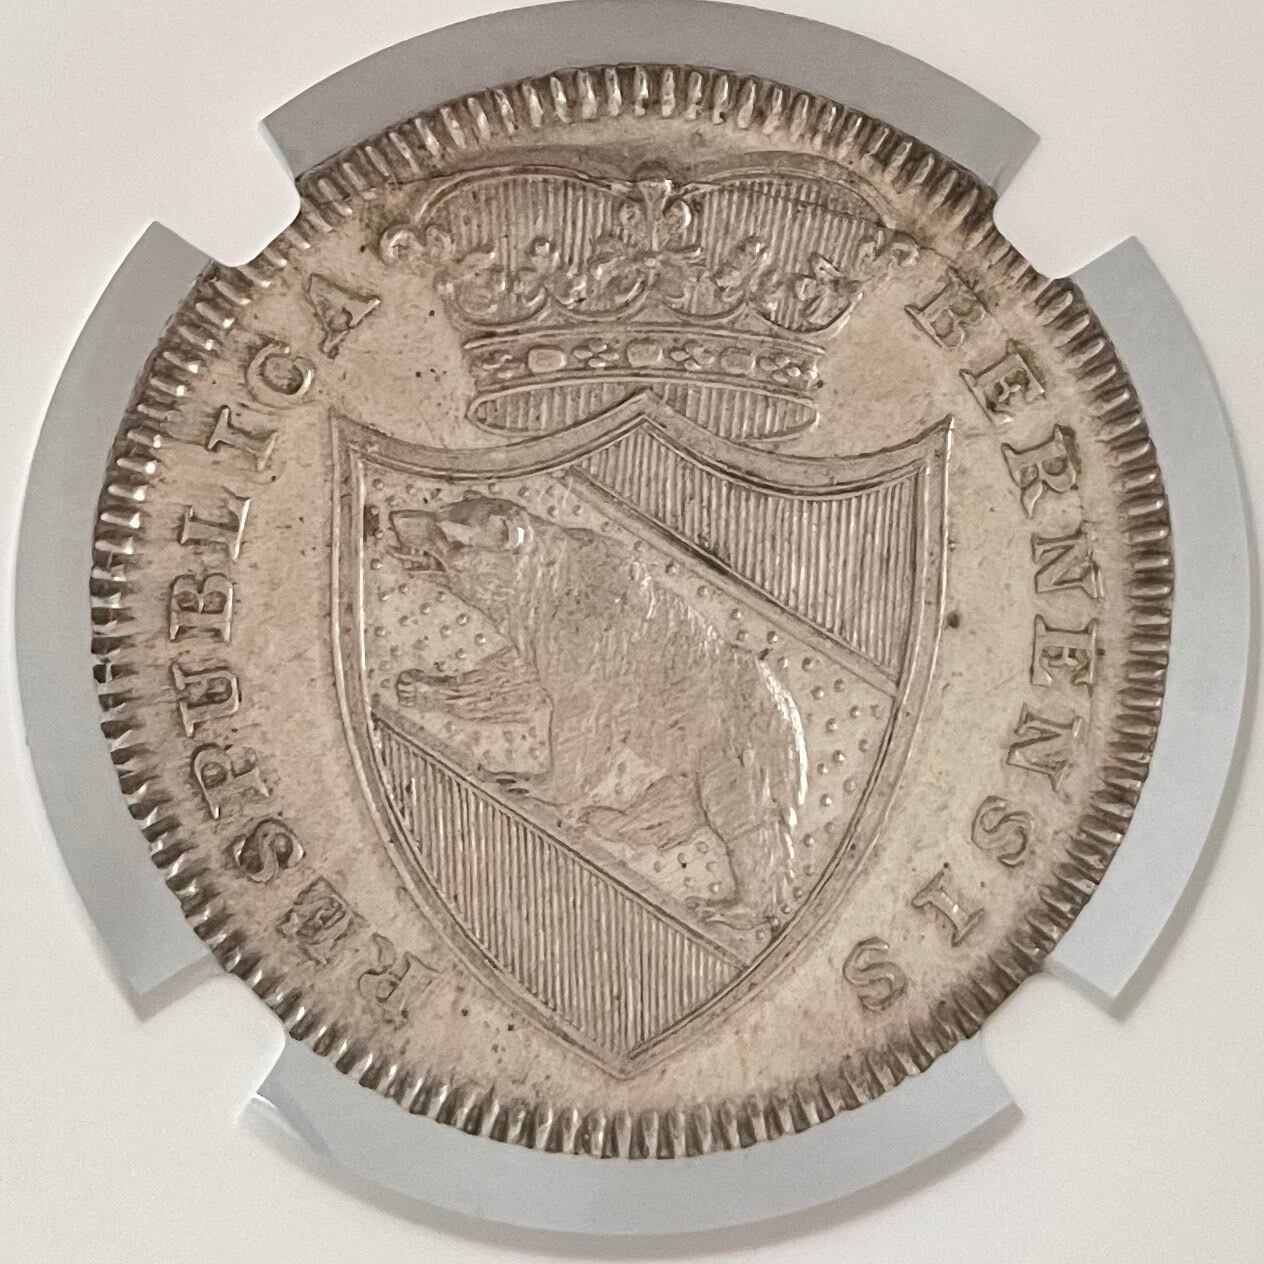 Coin Collectors Club